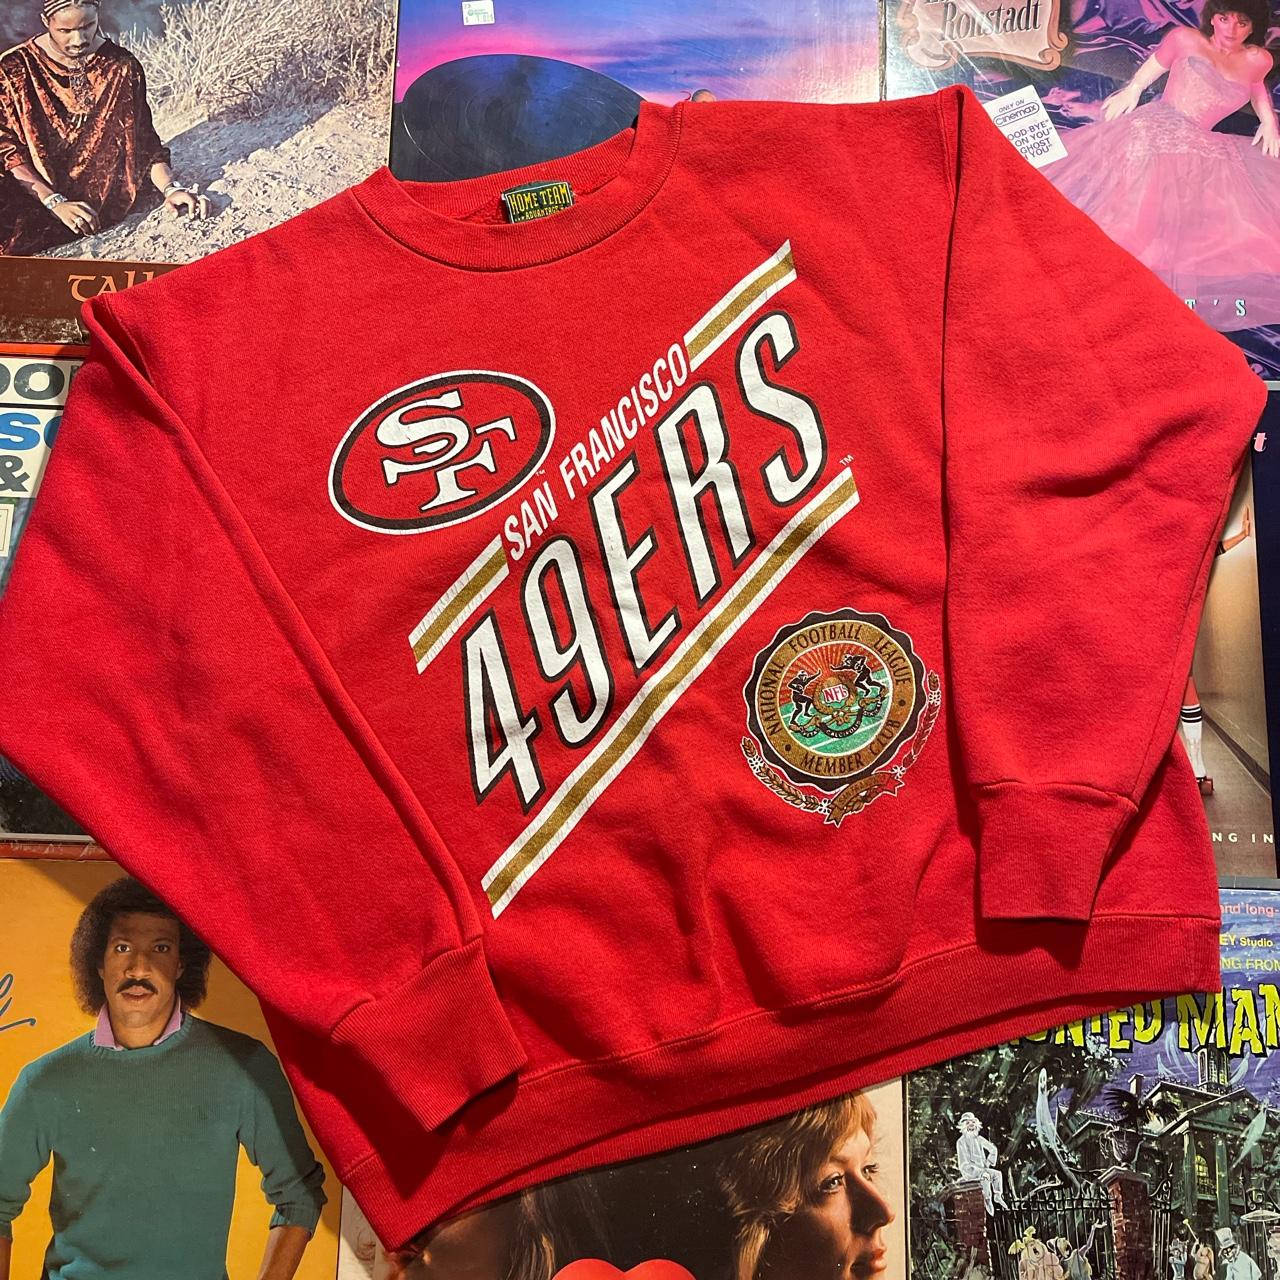 49er crewneck sweatshirt